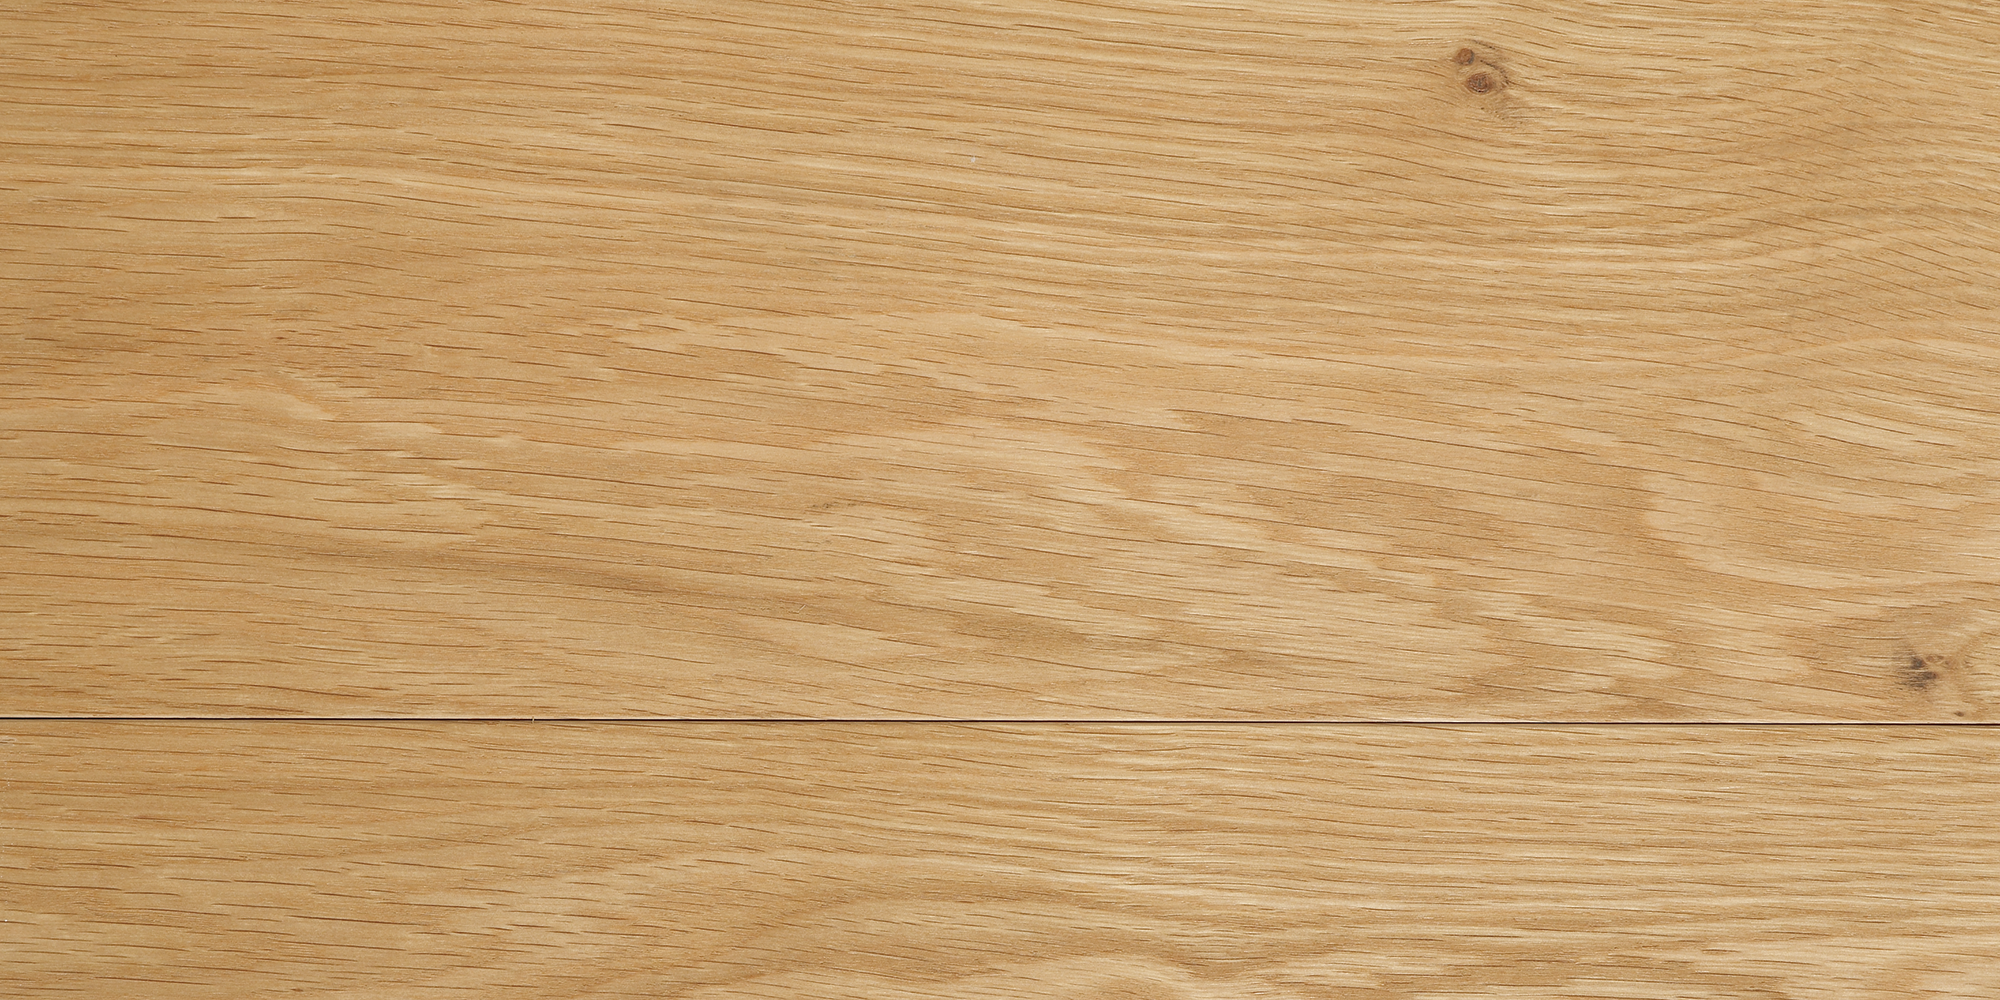 Wood Flooring Grades Explained, Knots In Hardwood Flooring